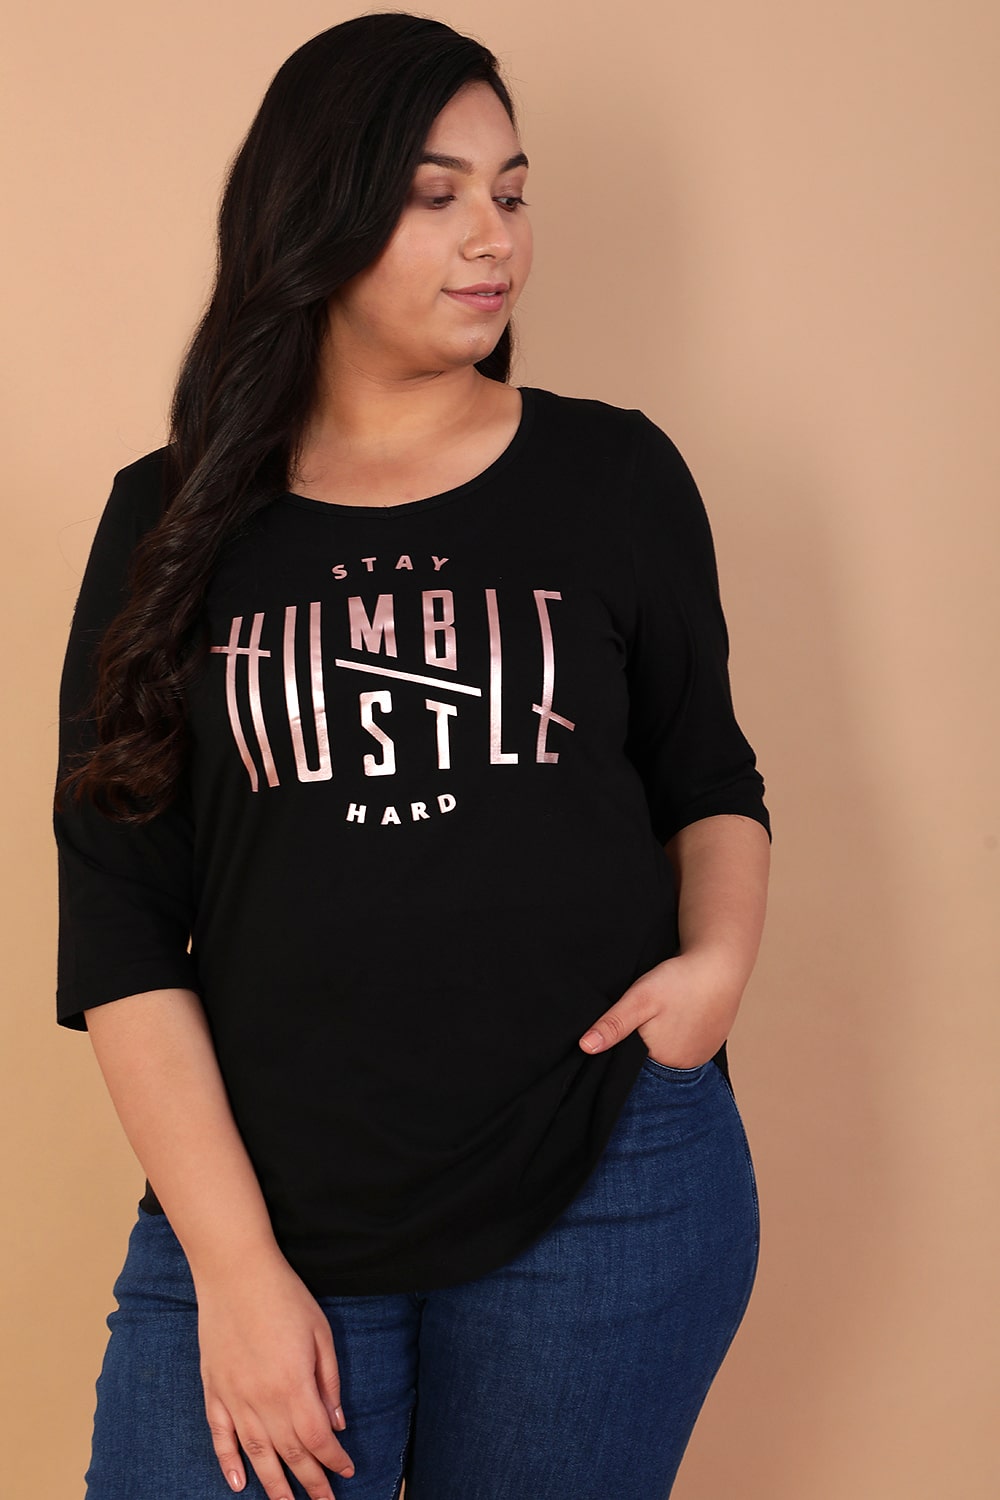 Humble Hustle Black Tshirt